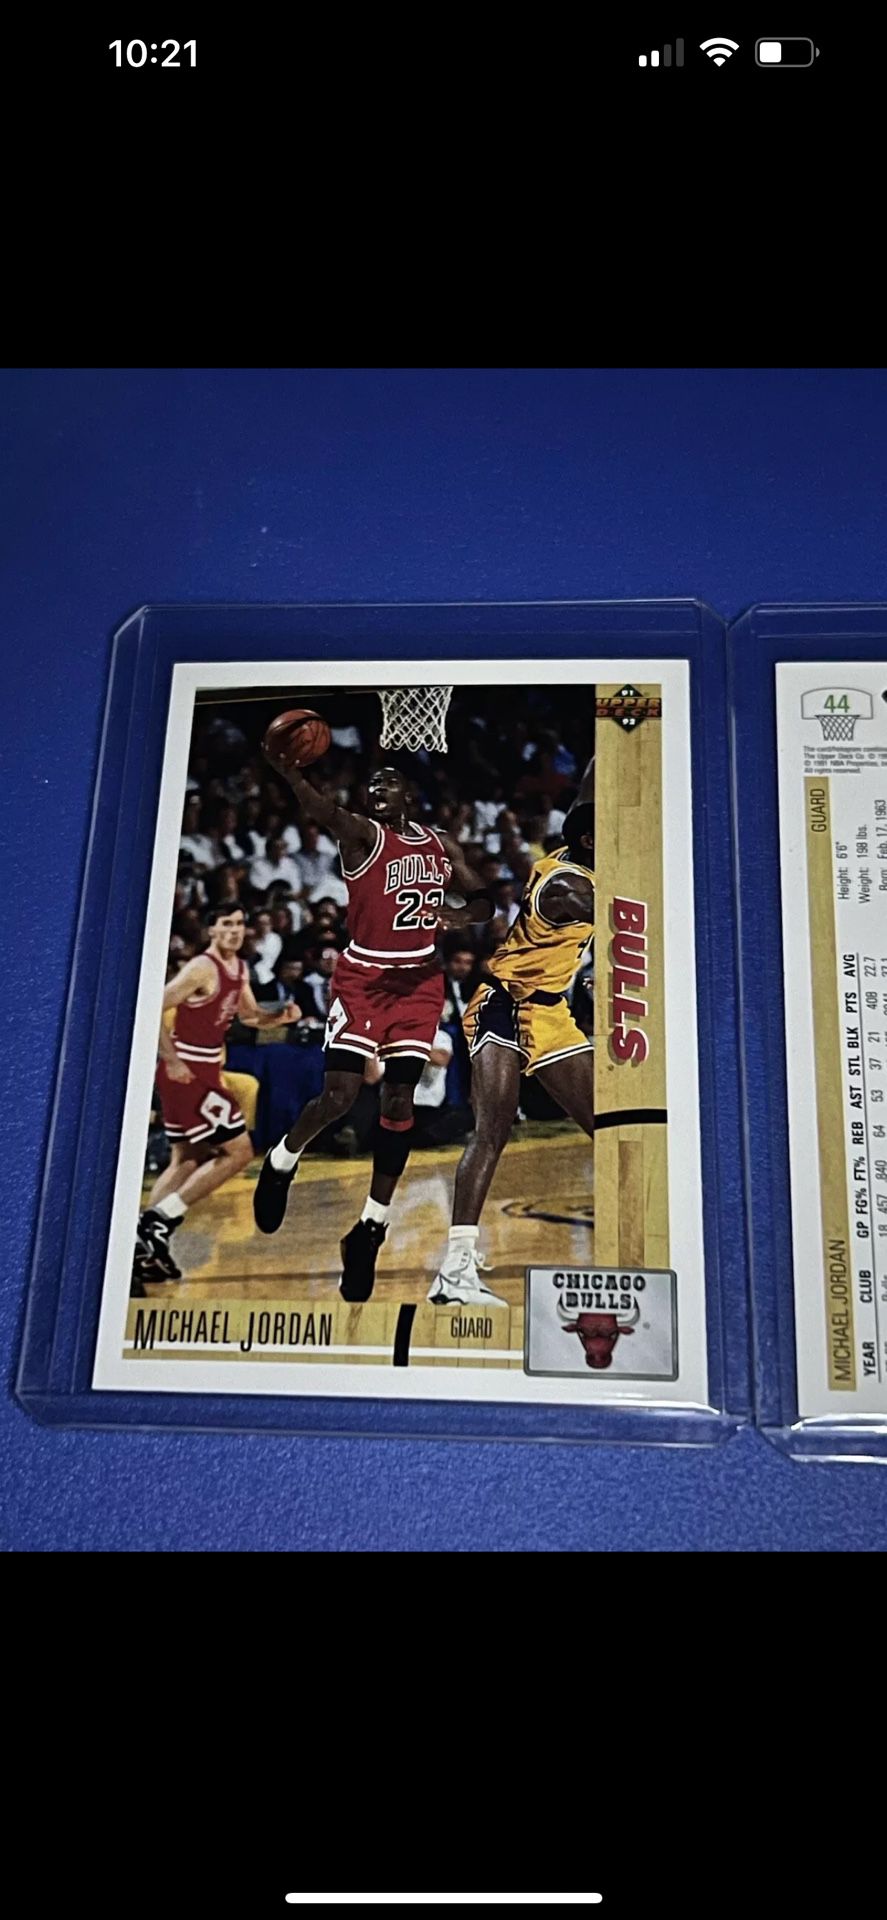 1991 Upper Deck Michael Jordan #44 Mint conditionChicago Bulls